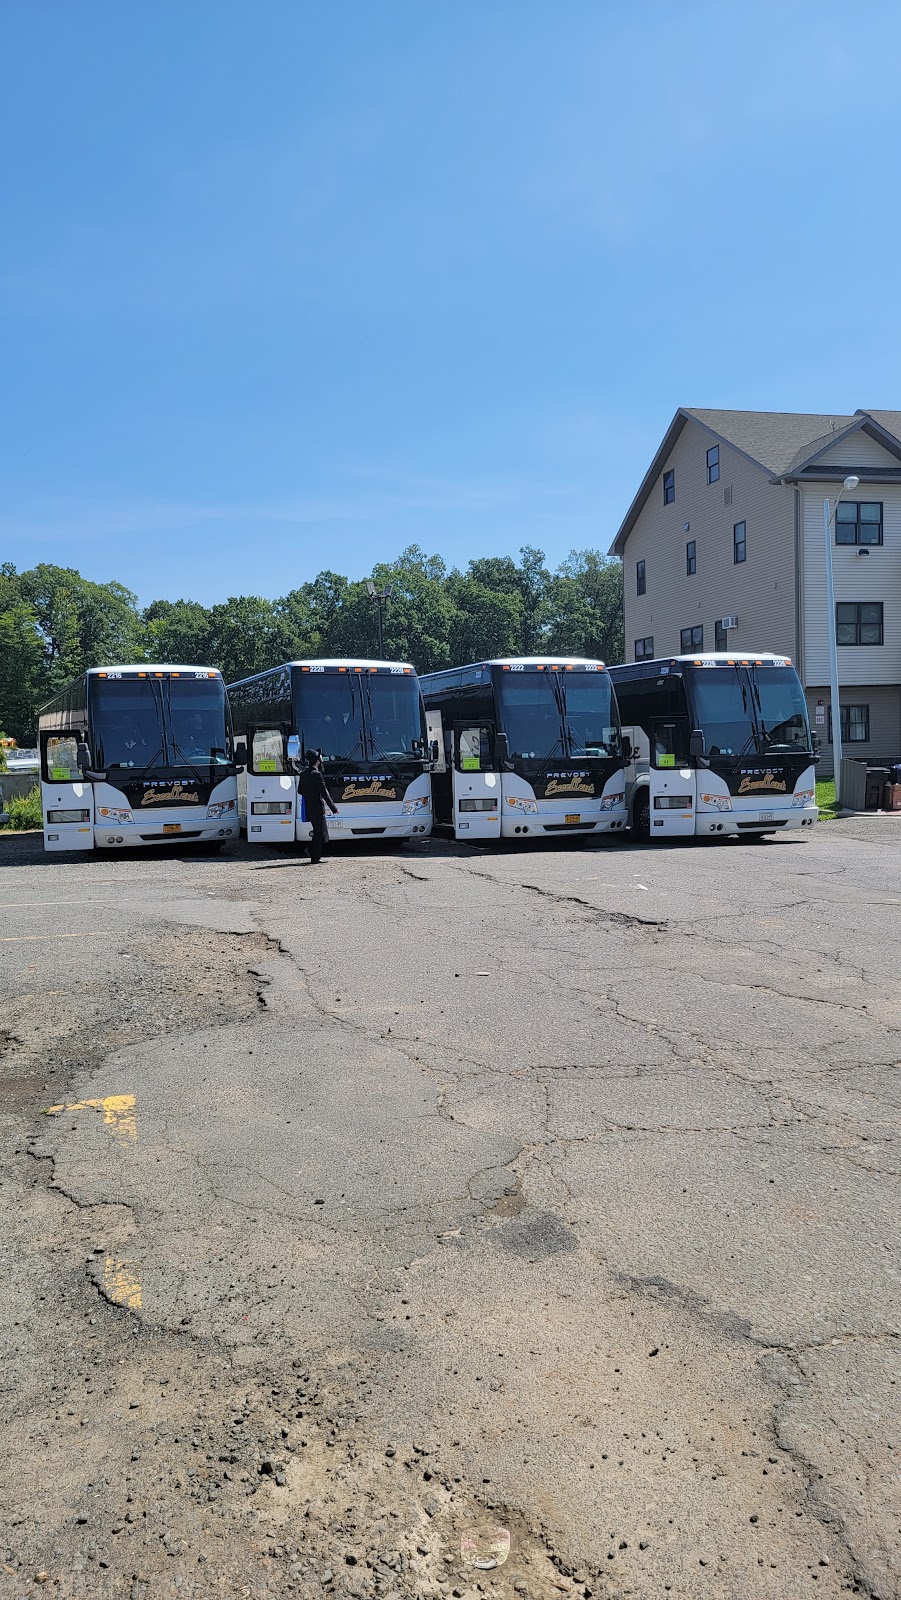 Excellent Bus Service - Main Terminal | 301 Bridgeville Rd, Monticello, NY 12701 | Phone: (718) 963-1495